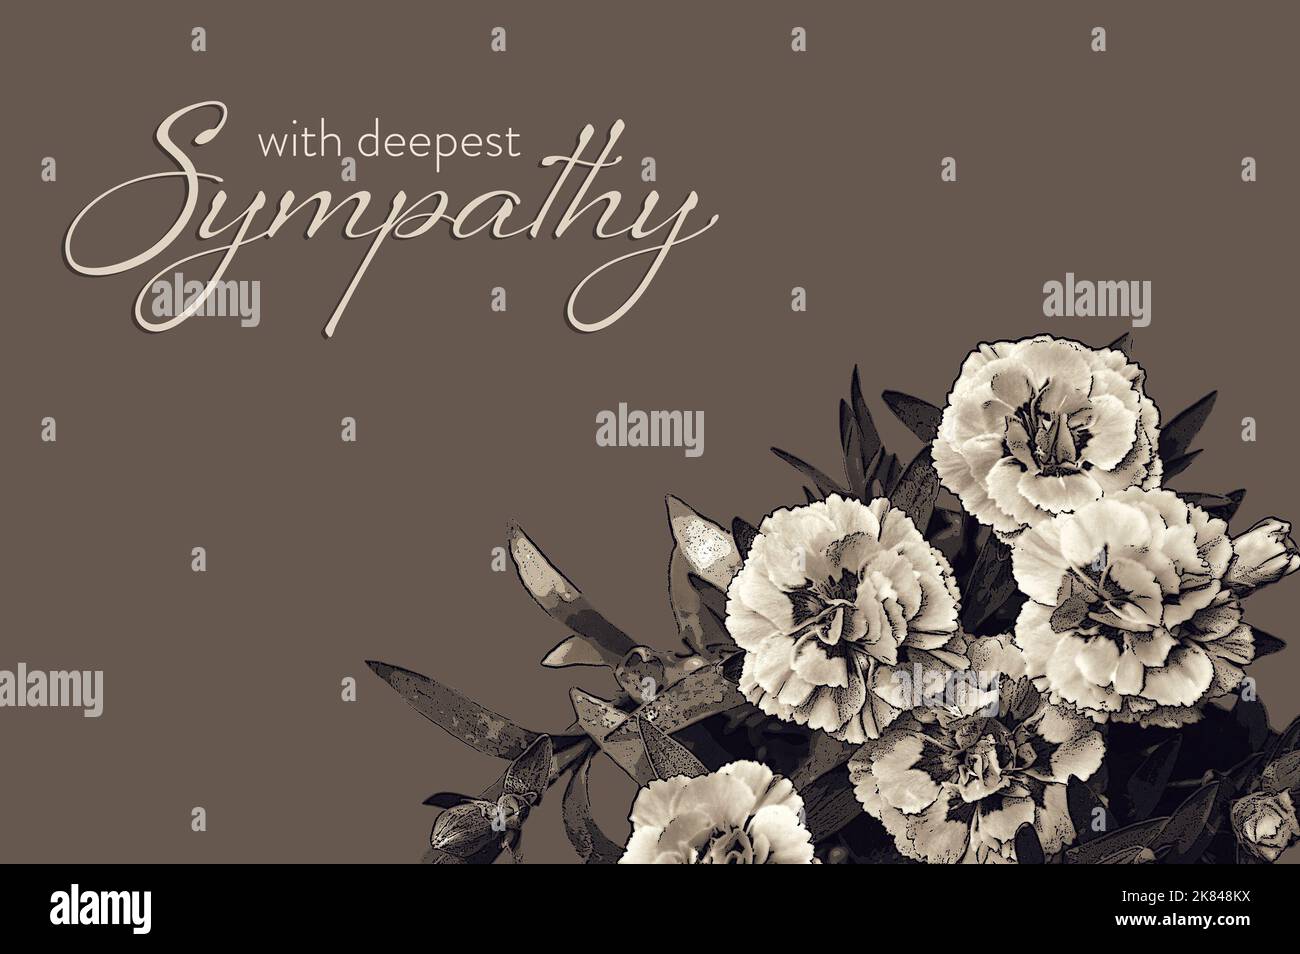 Sympathy card with white carnation illustration Stock Photo